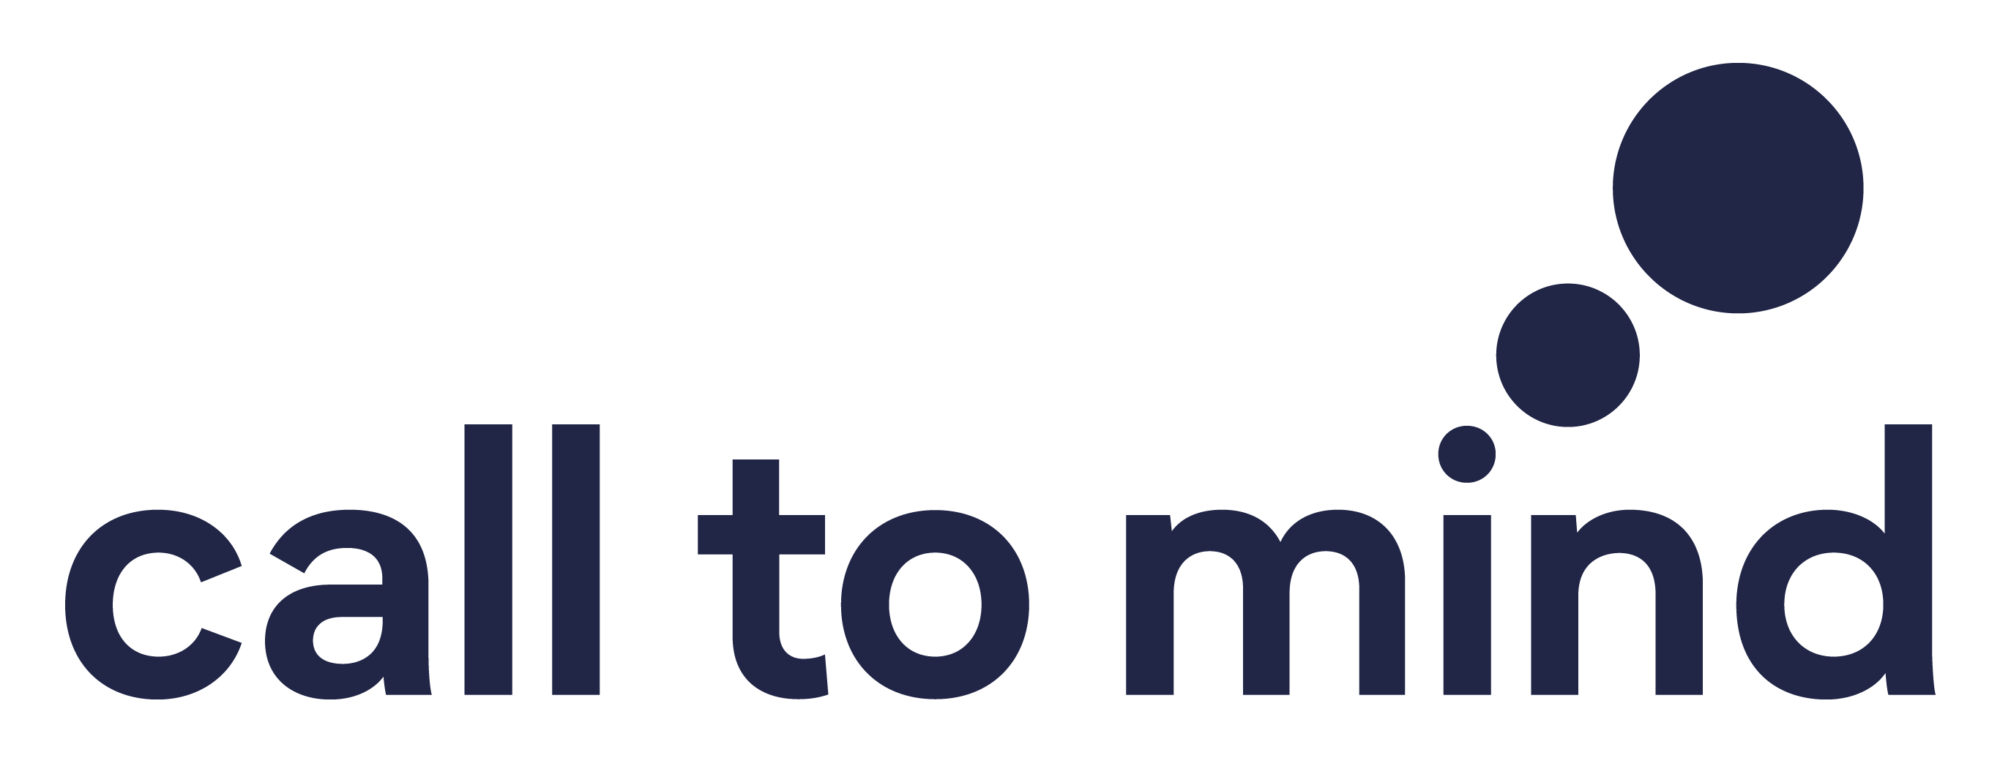 ctm logo digital navy(1)